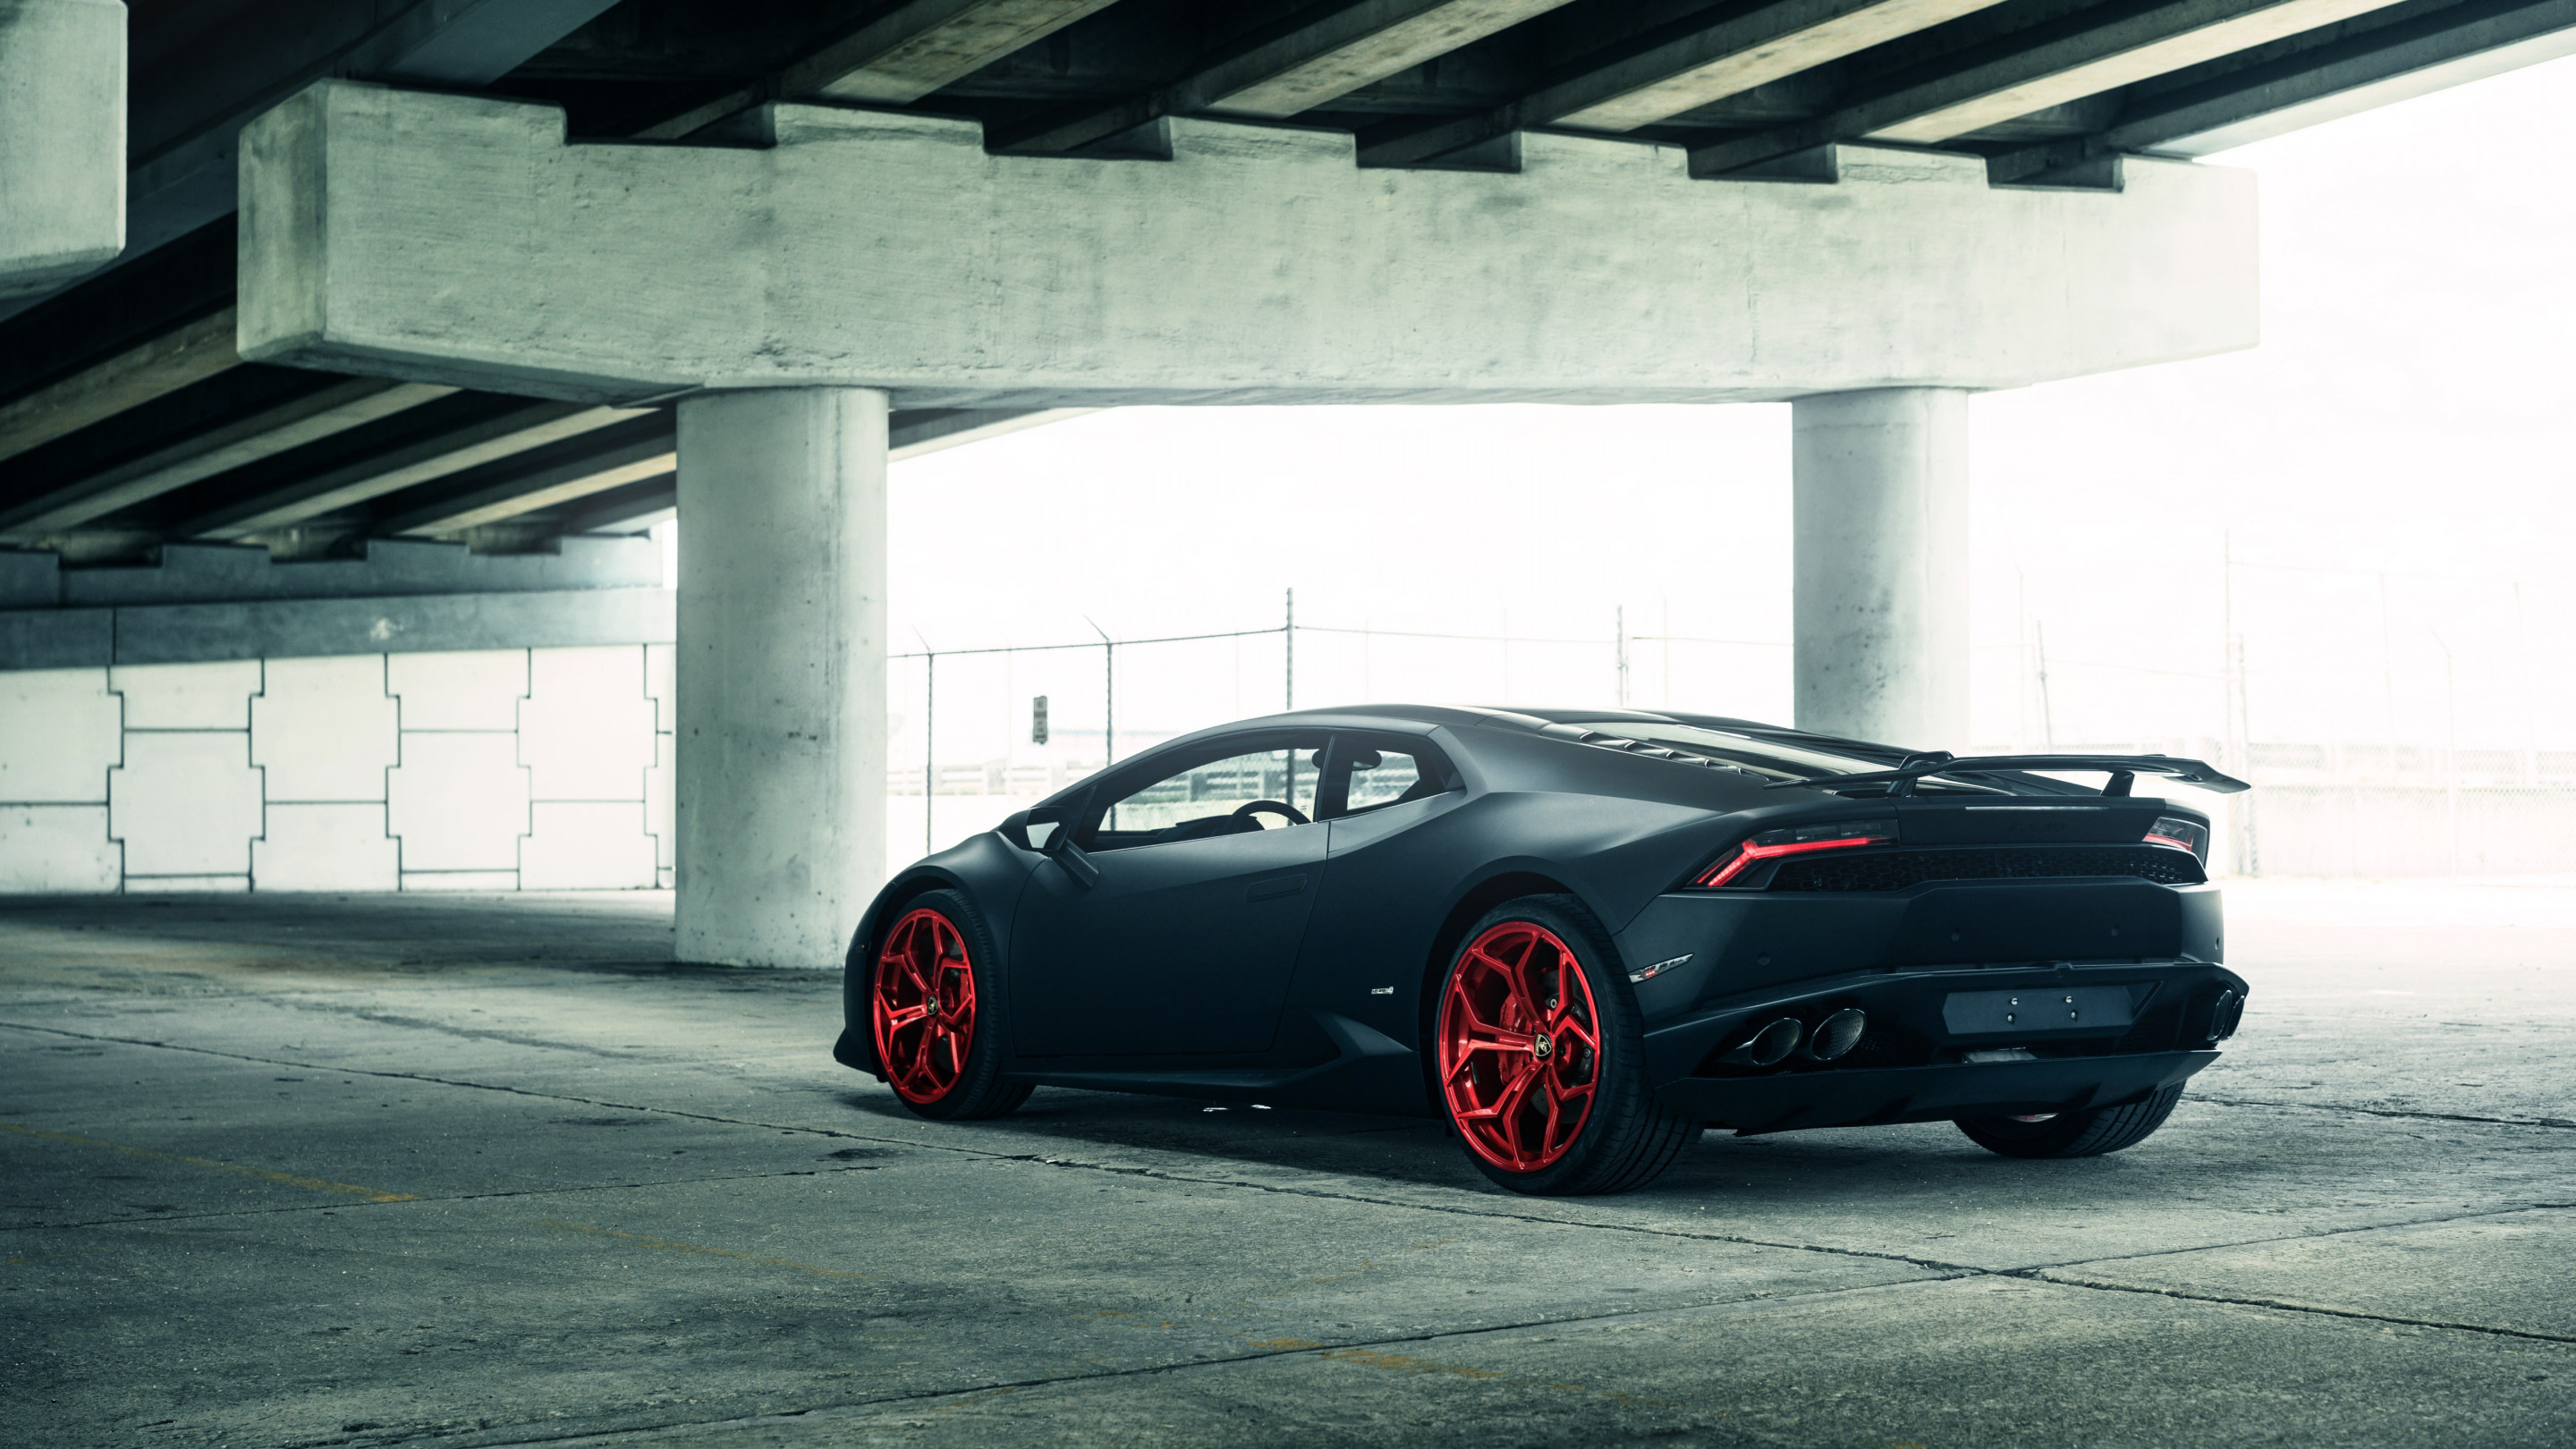 Vellano Matte Black Lamborghini Huracan on Red 3 wallpaper 2880x1620